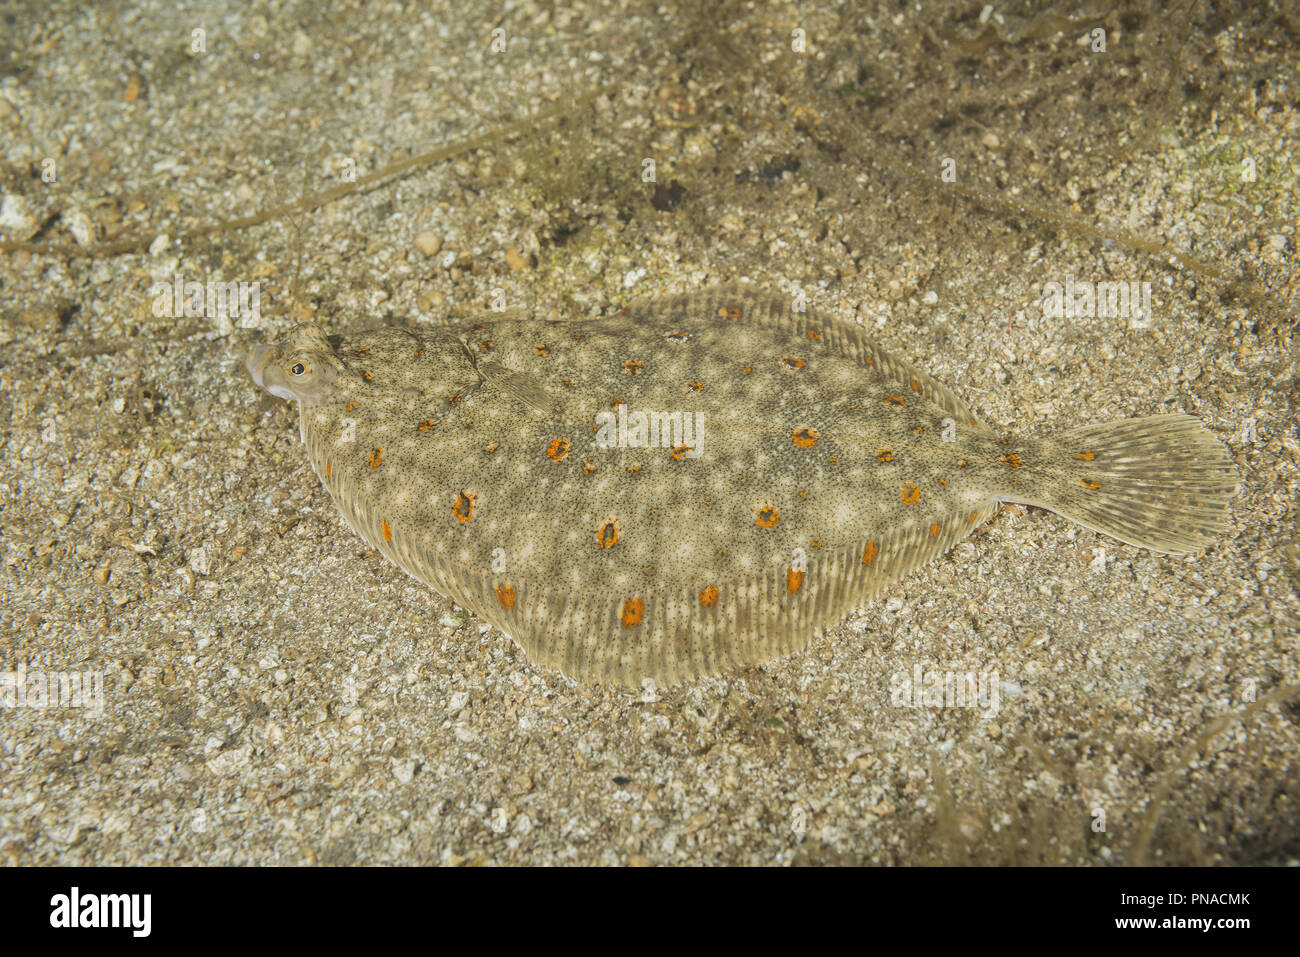 Flatfish flounder hi-res stock photography and images - Alamy